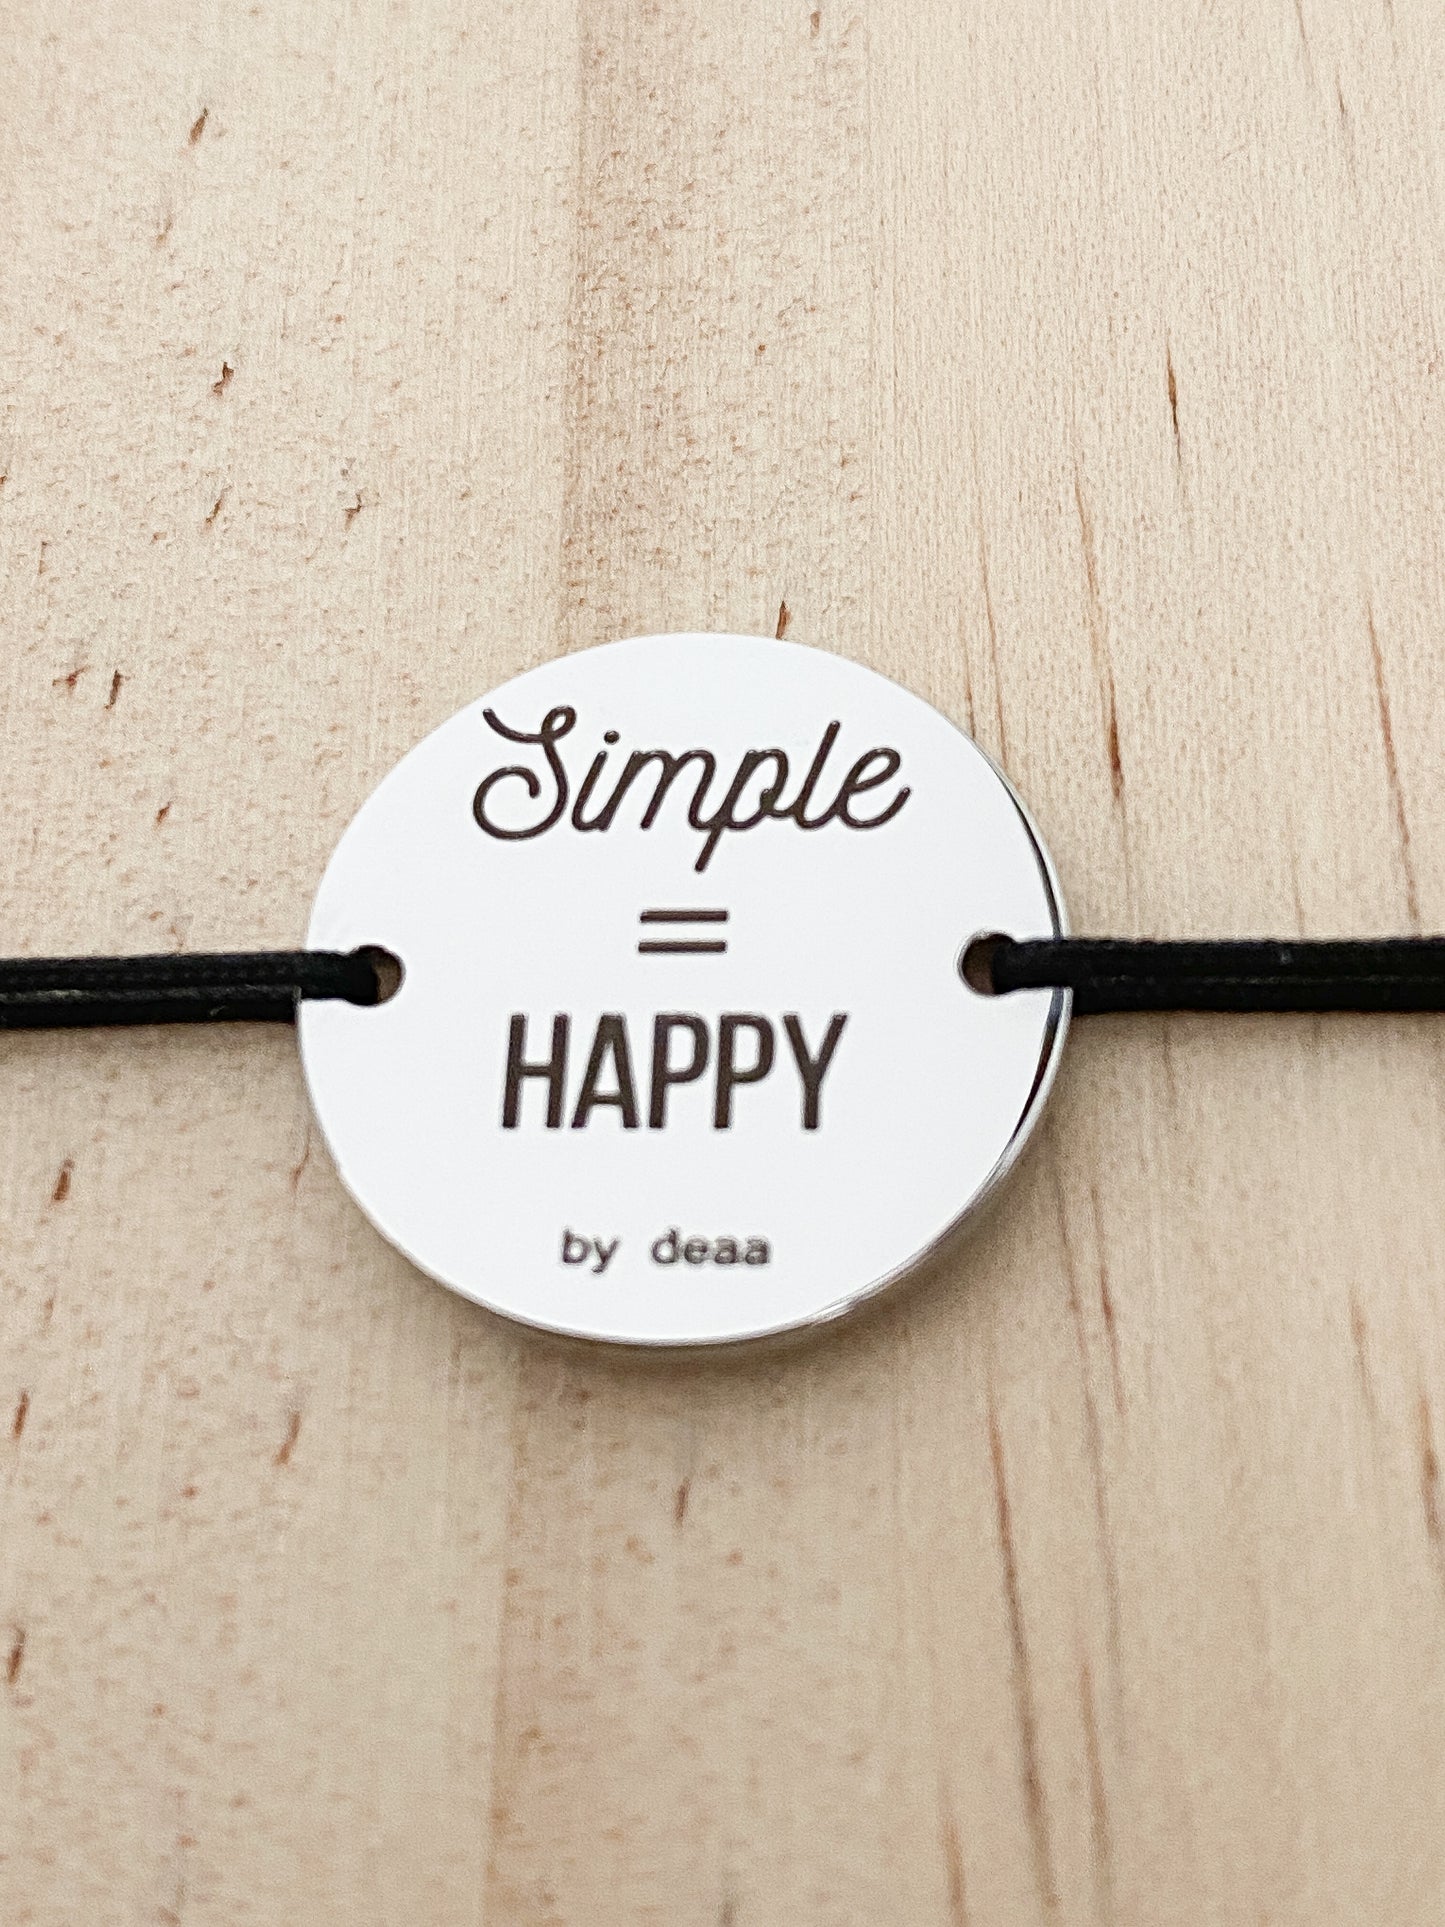 Simple = Happy